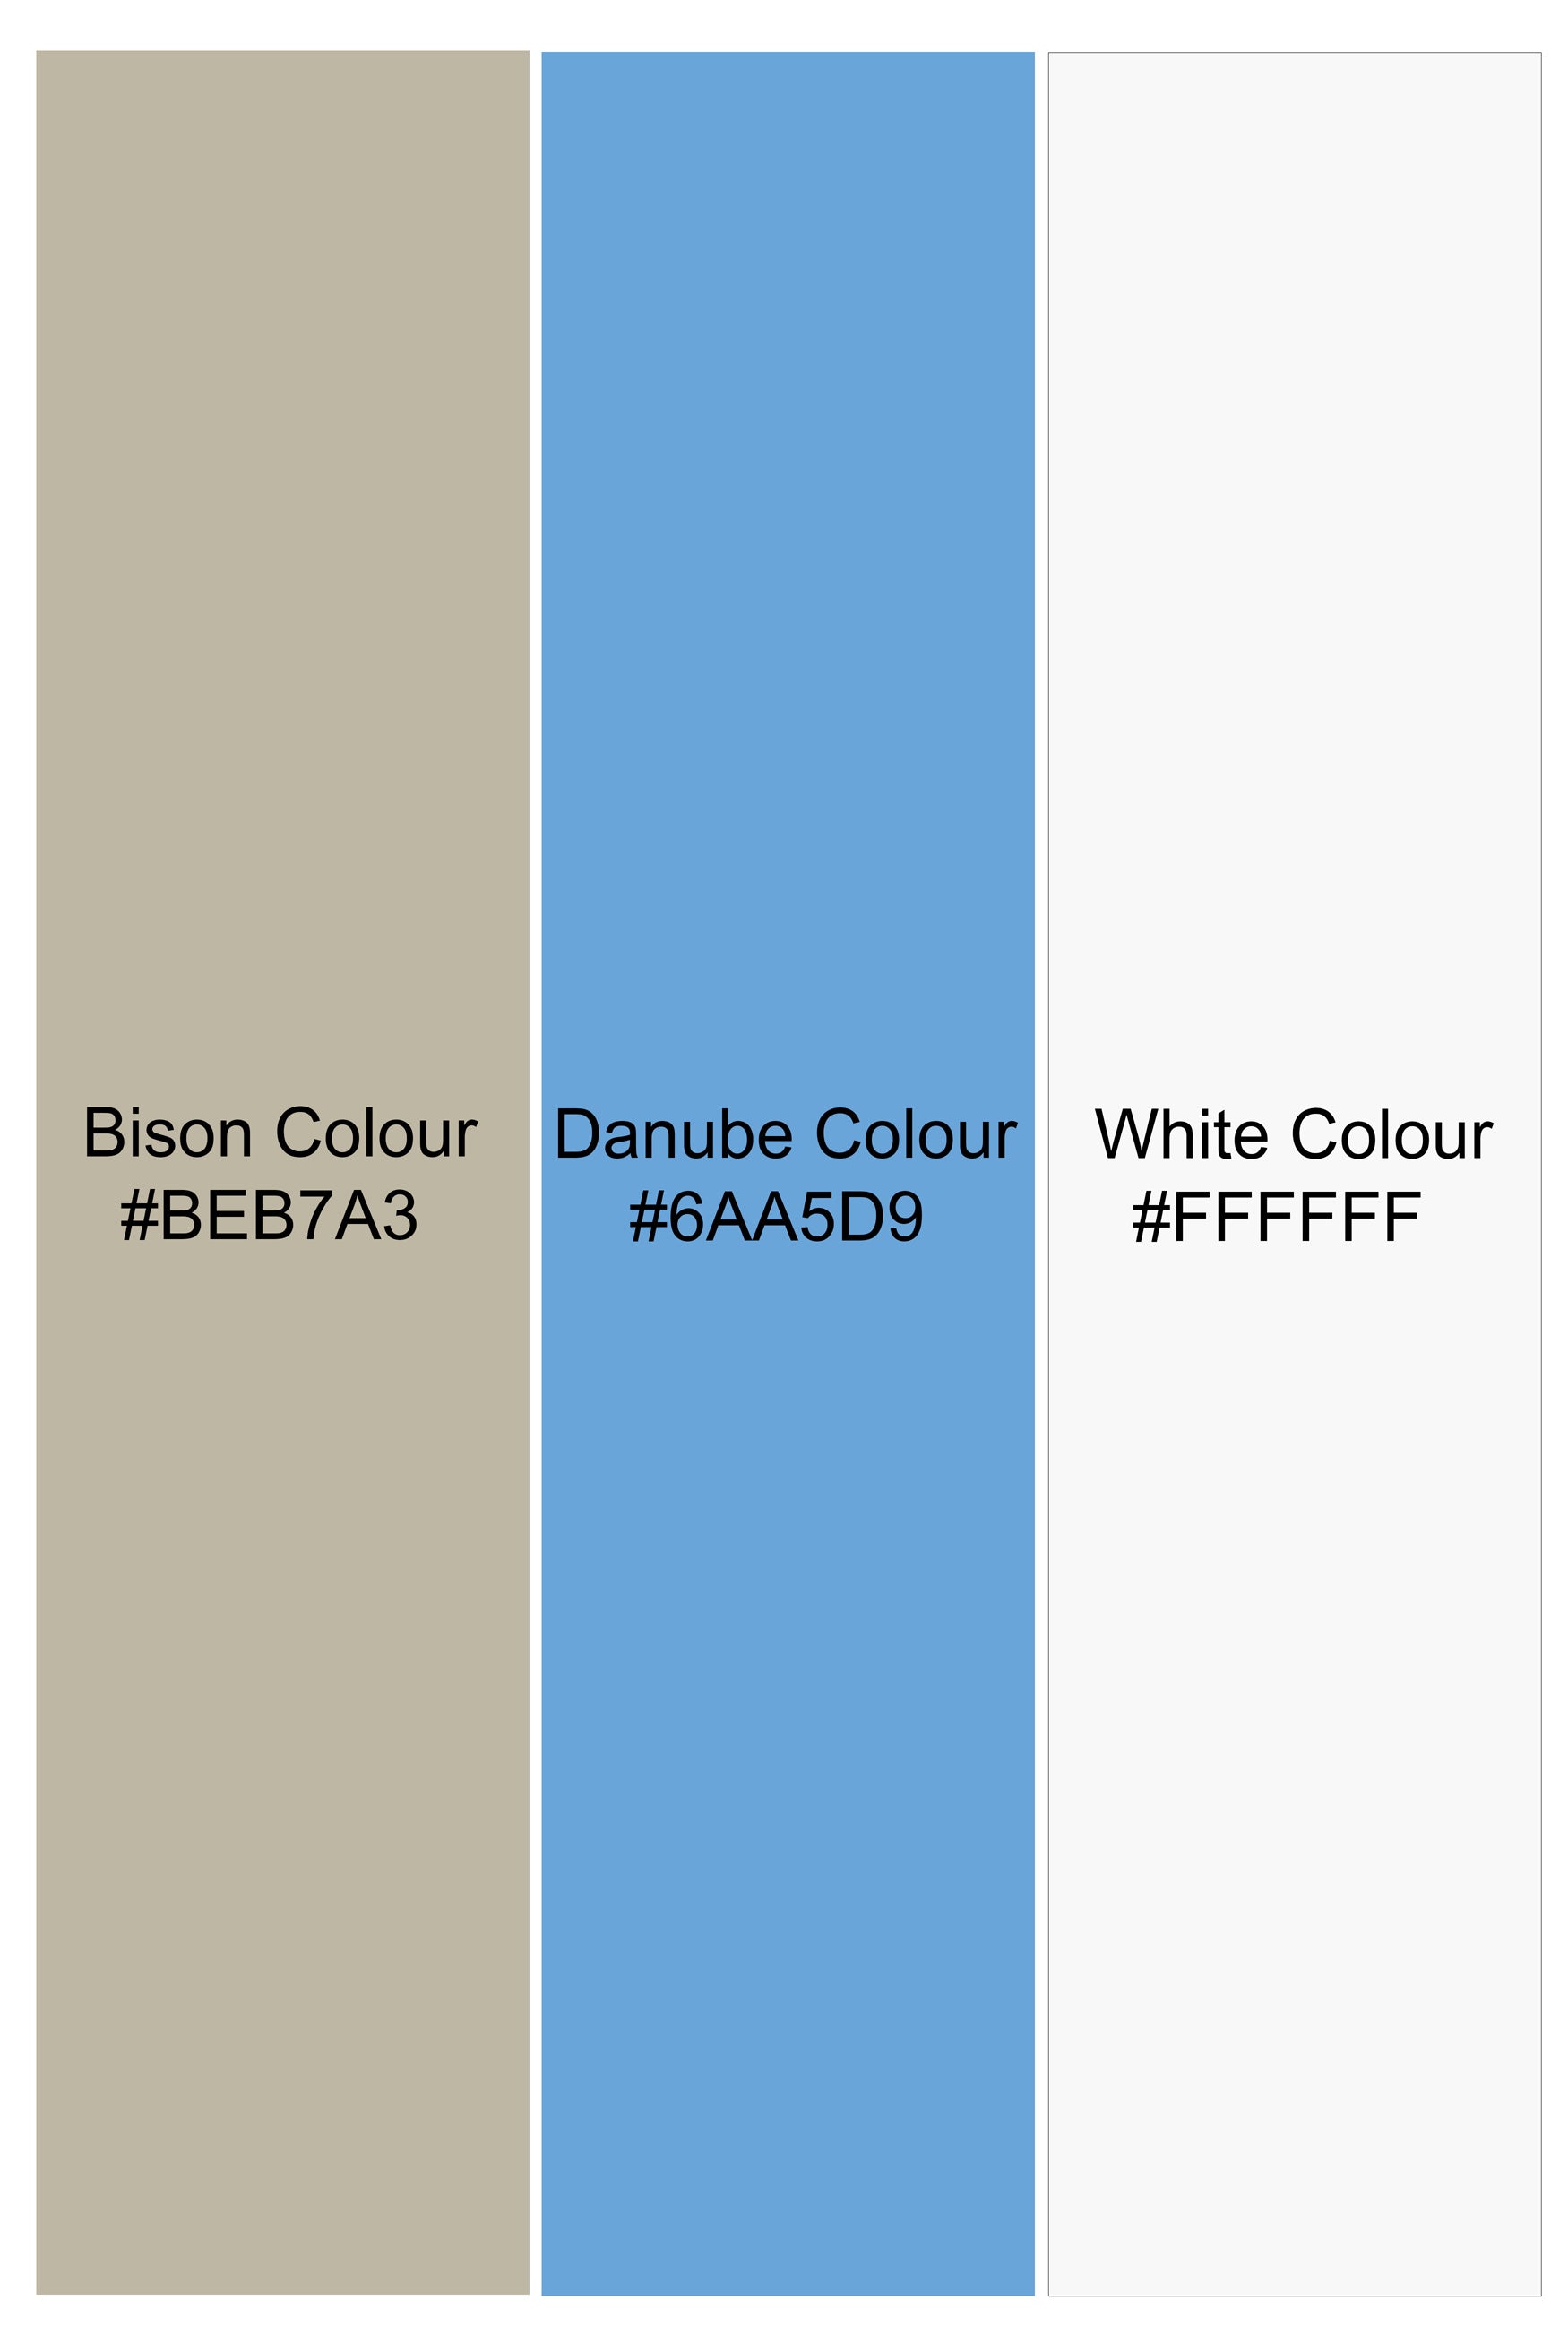 Bison Brown with Danube Blue and White Geometric Printed Premium Cotton Designer Shirt 11695-P500-38, 11695-P500-H-38, 11695-P500-39, 11695-P500-H-39, 11695-P500-40, 11695-P500-H-40, 11695-P500-42, 11695-P500-H-42, 11695-P500-44, 11695-P500-H-44, 11695-P500-46, 11695-P500-H-46, 11695-P500-48, 11695-P500-H-48, 11695-P500-50, 11695-P500-H-50, 11695-P500-52, 11695-P500-H-52